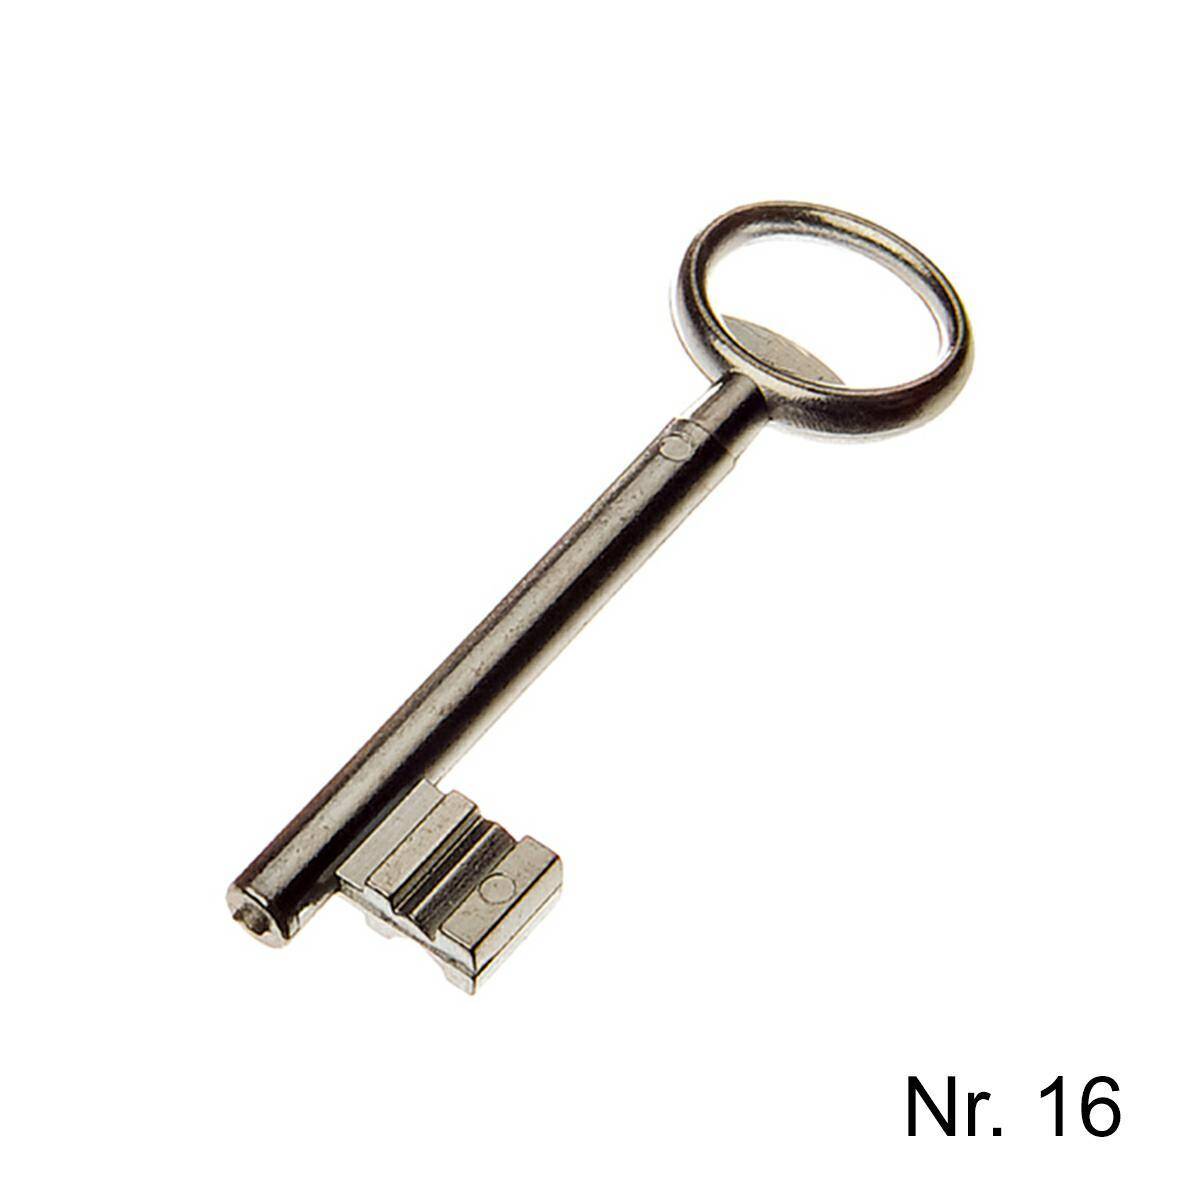 Cast key Jania for the lock - No. 16